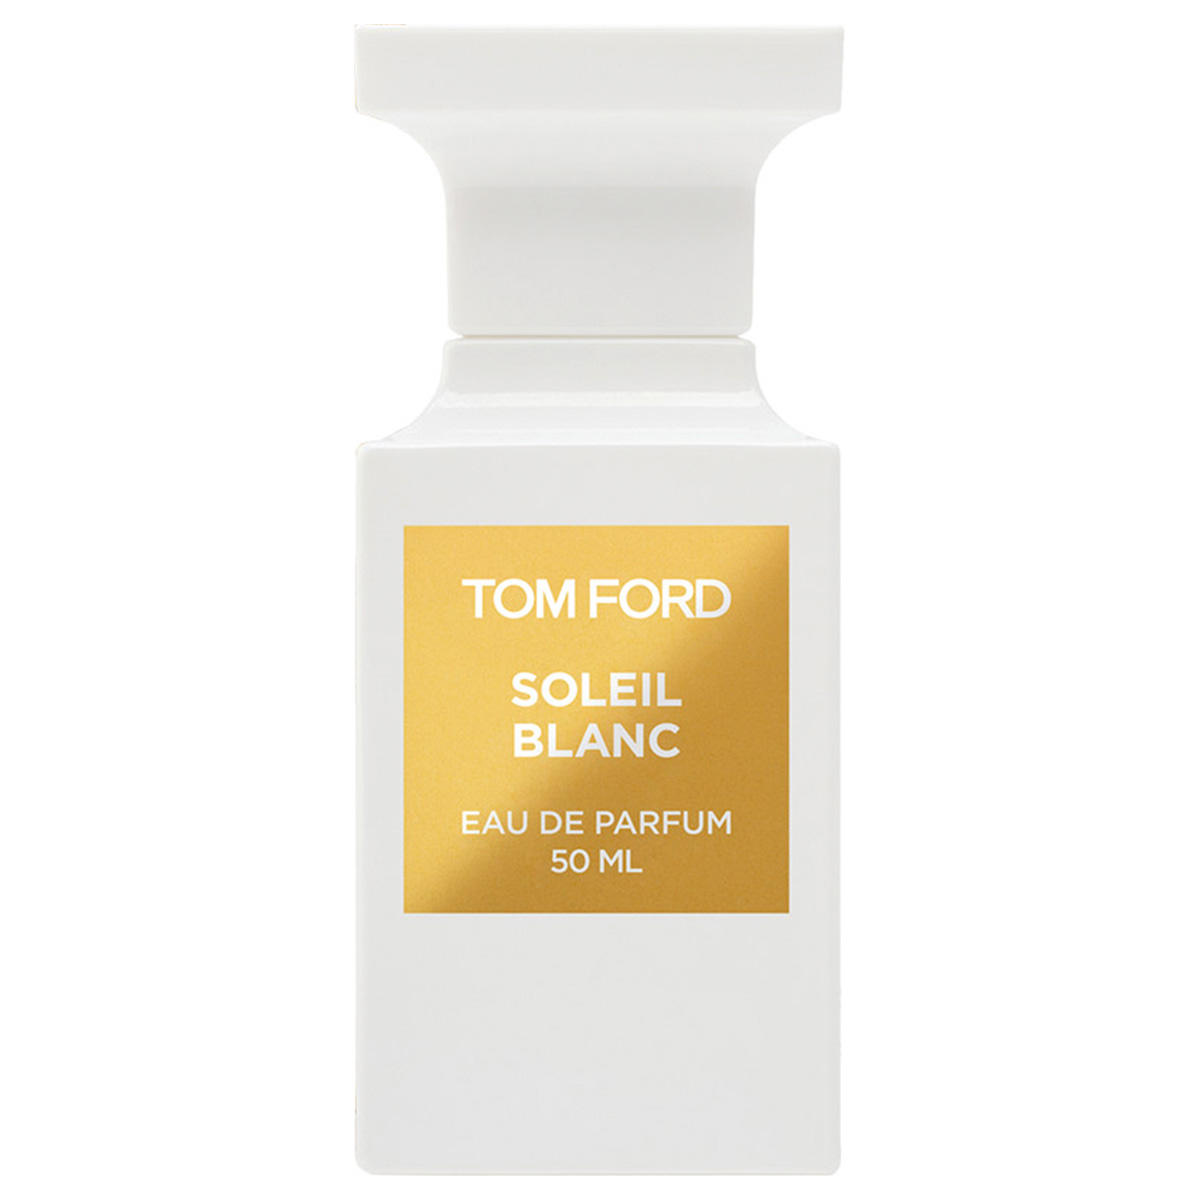 Tom Ford Soleil Blanc Eau de Parfum 50 ml - 1